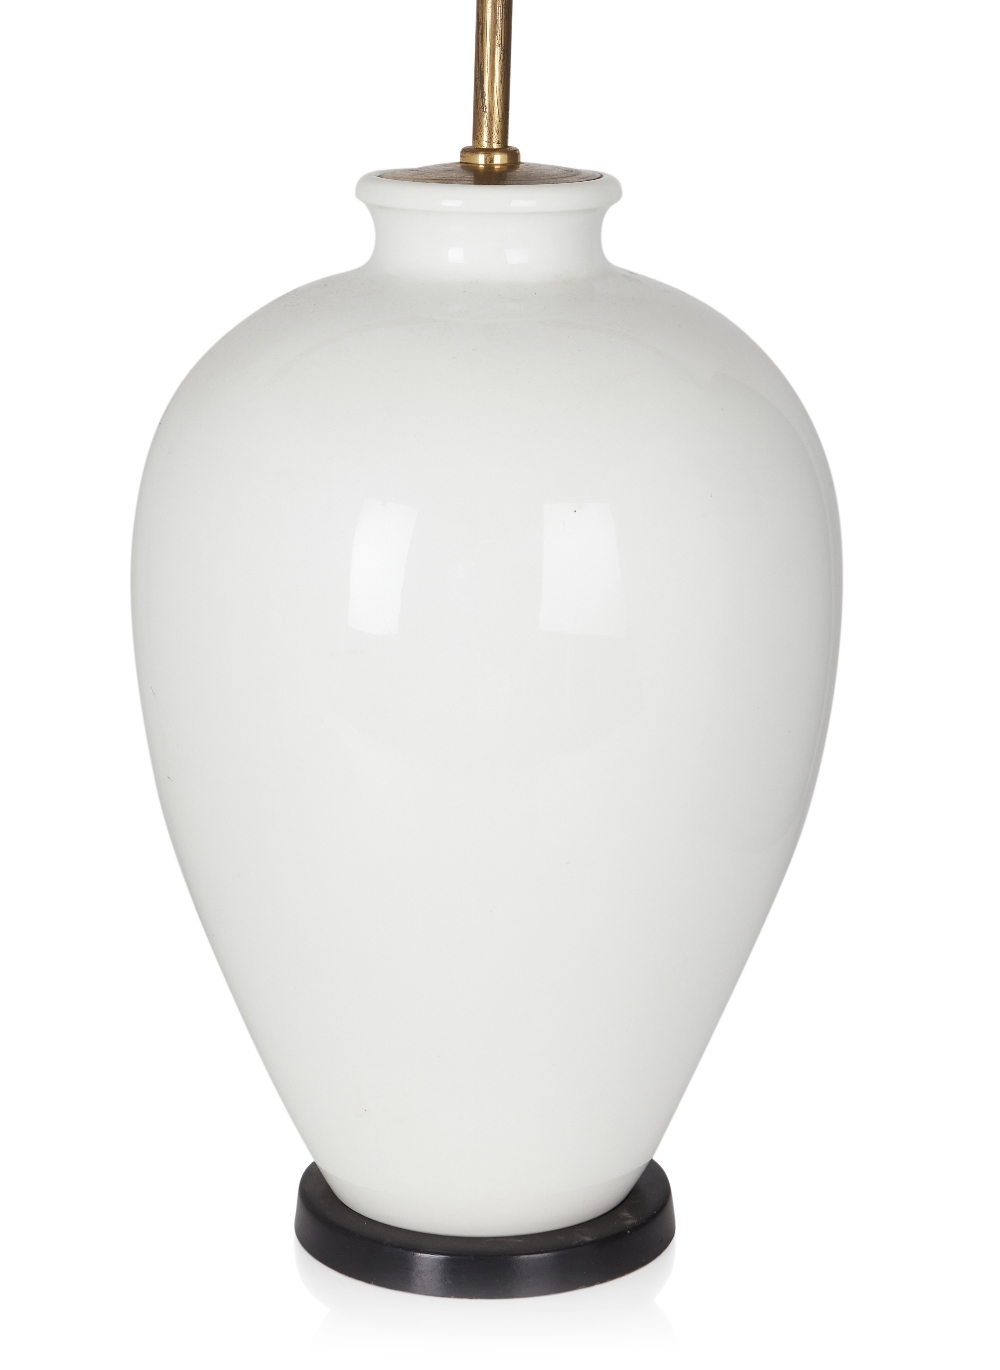 KPM, Vase floor lamp, circa 1960, Ceramic, brass, electrical fittings, Brass plate to underside - Image 2 of 2